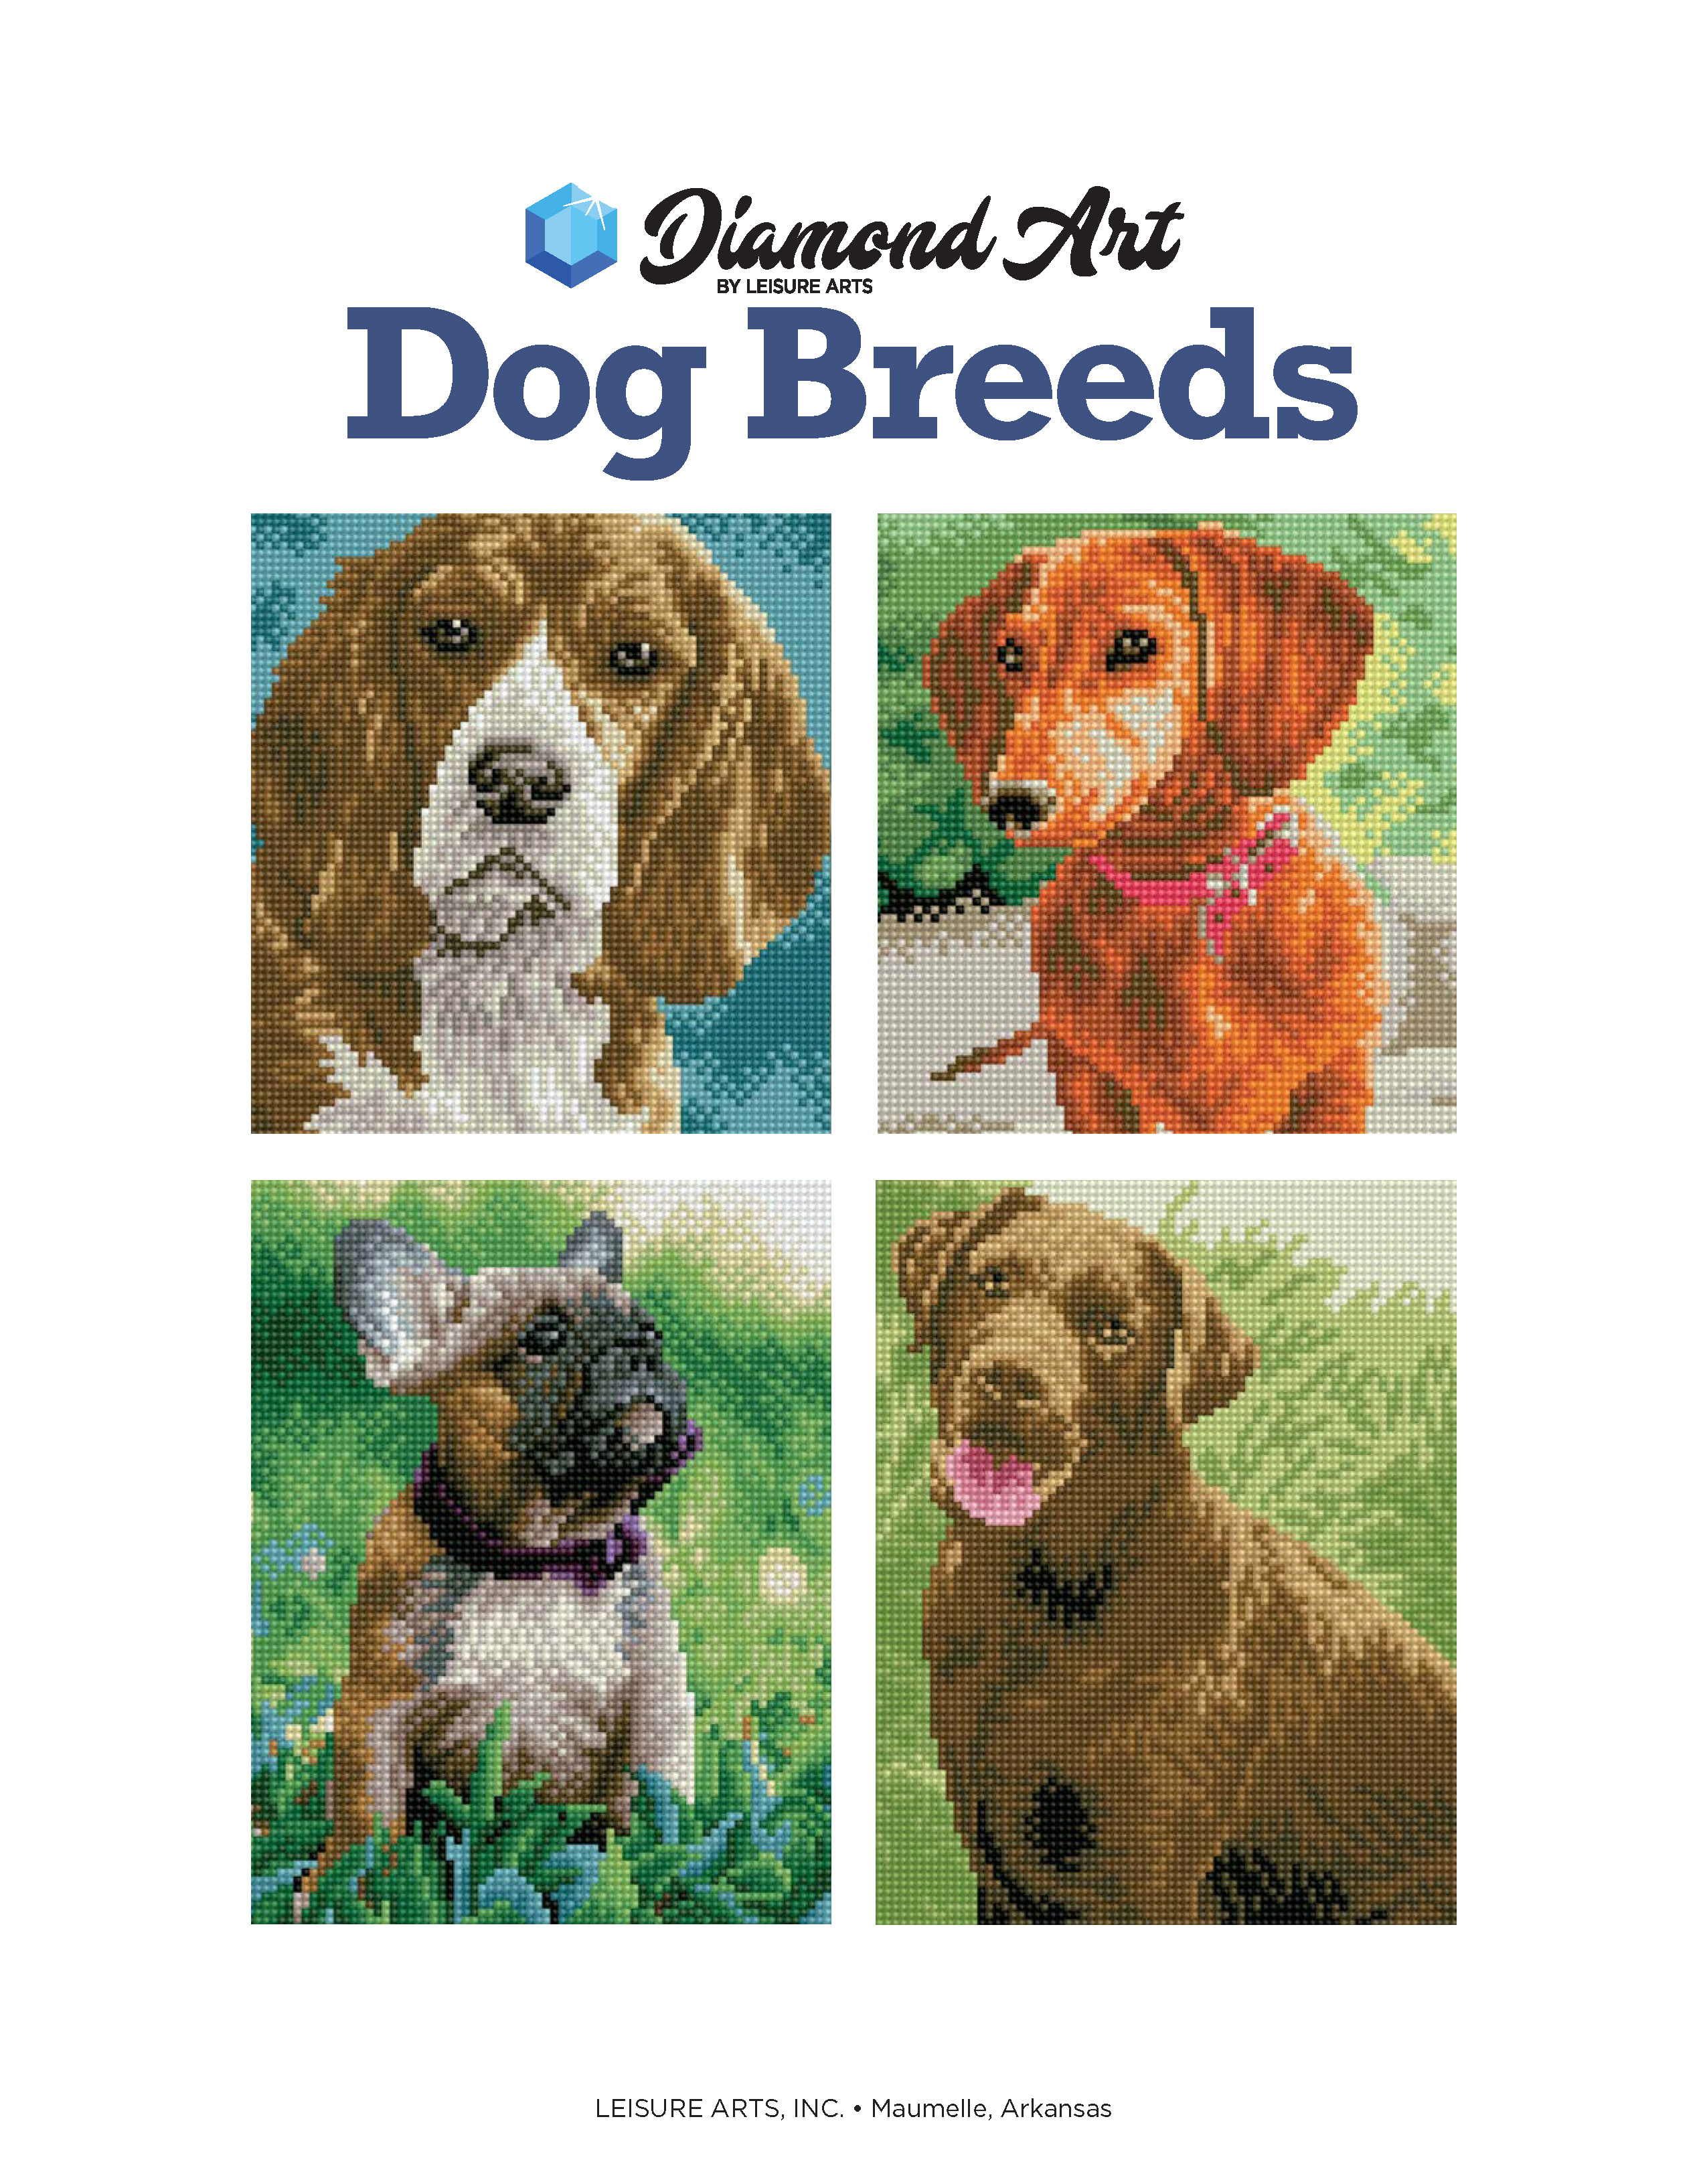 Diamond Art By Freestyle Diamond Dotting Dog Breeds Painting Charts & Idea  Book